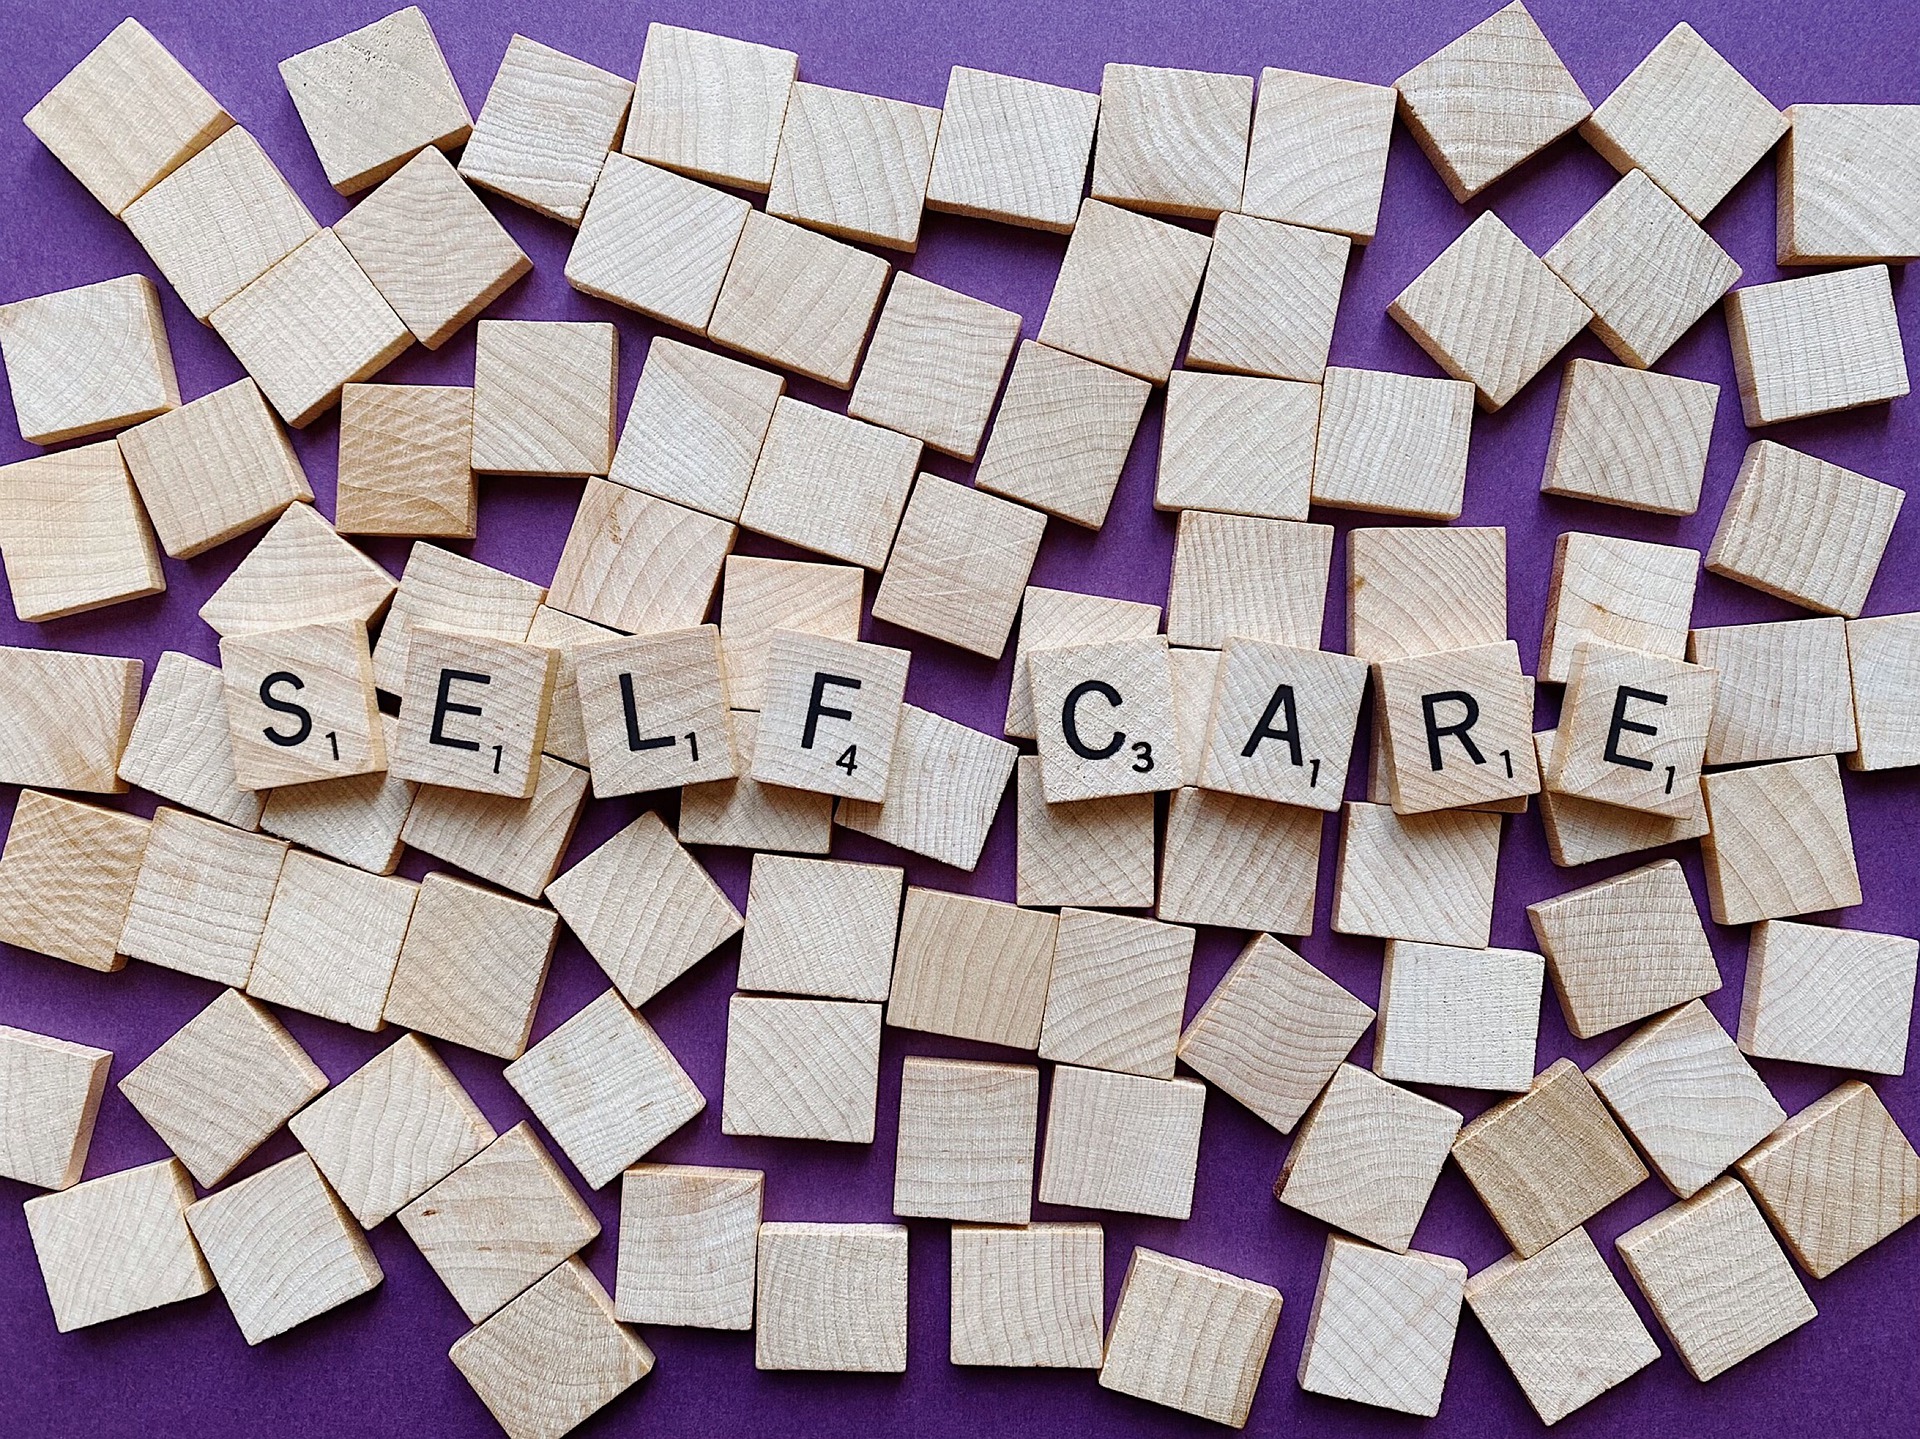 Self Care Scrabble Tiles